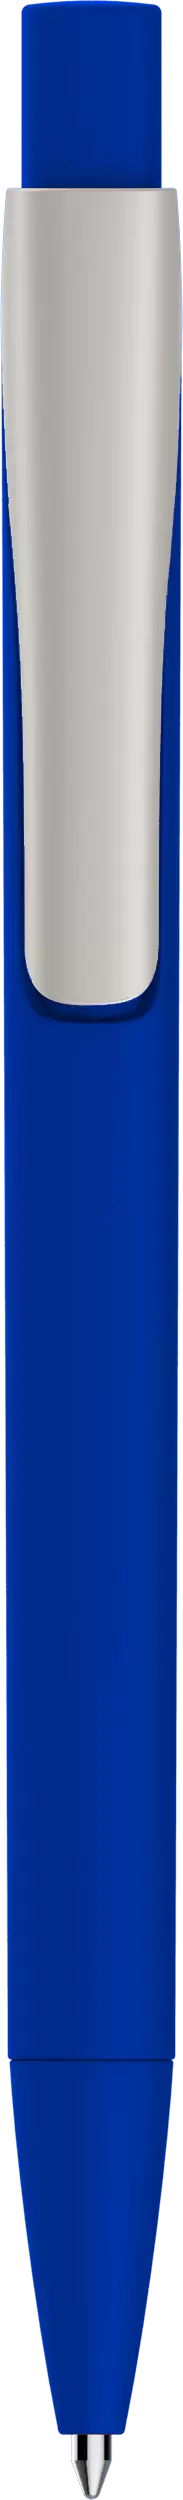 Ручка MASTER SOFT Синяя 1040-01